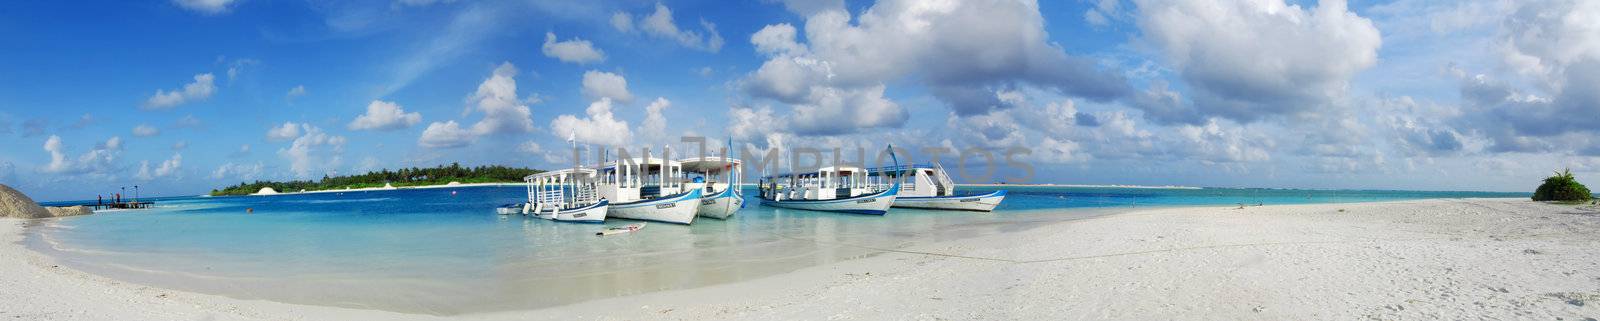 Beautiful white Maldivian beach and five dhoni ships docked nearby